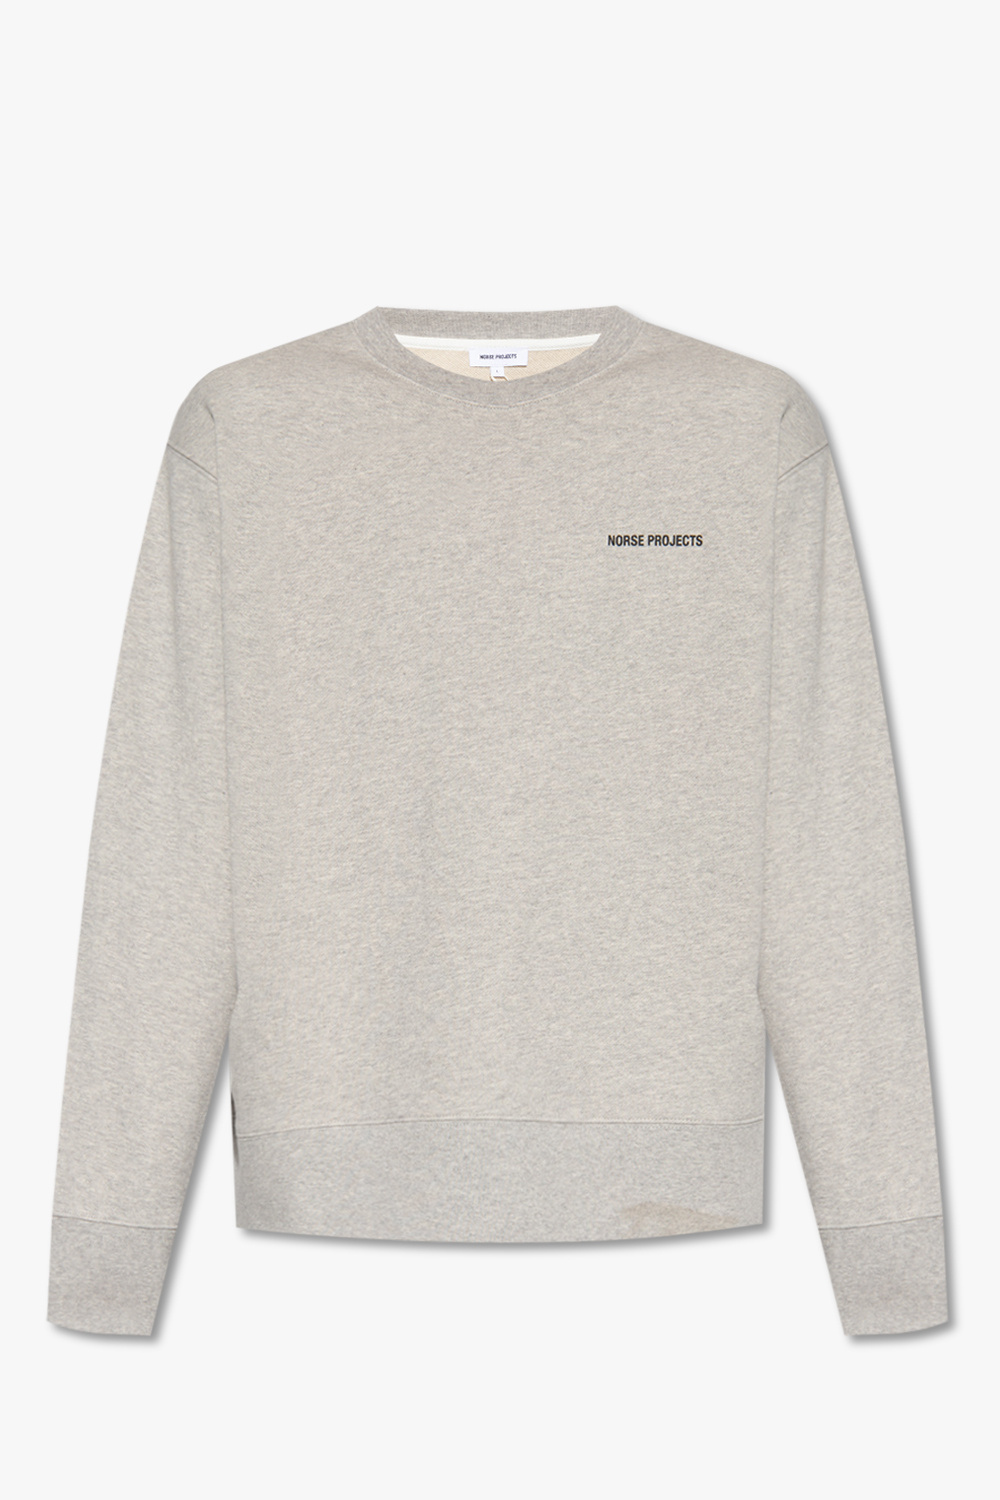 Norse Projects ‘Arne’ sweatshirt | Men's Clothing | Vitkac